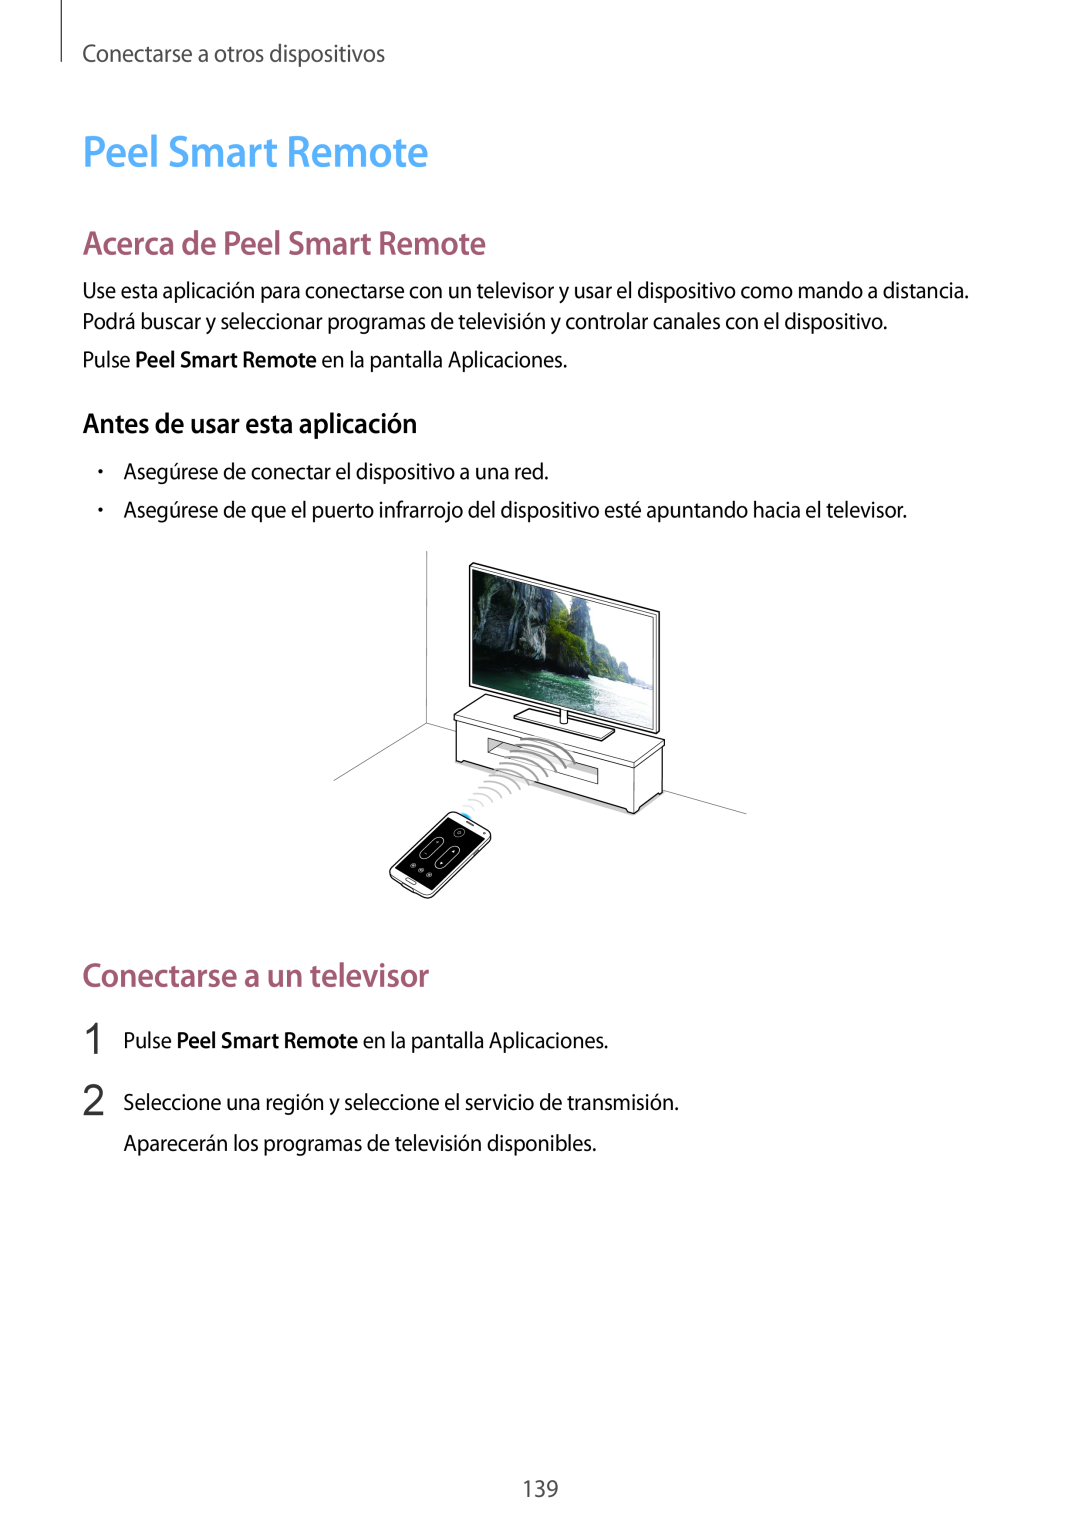 Samsung SM-G900FZKAETL manual Acerca de Peel Smart Remote, Conectarse a un televisor, Antes de usar esta aplicación 